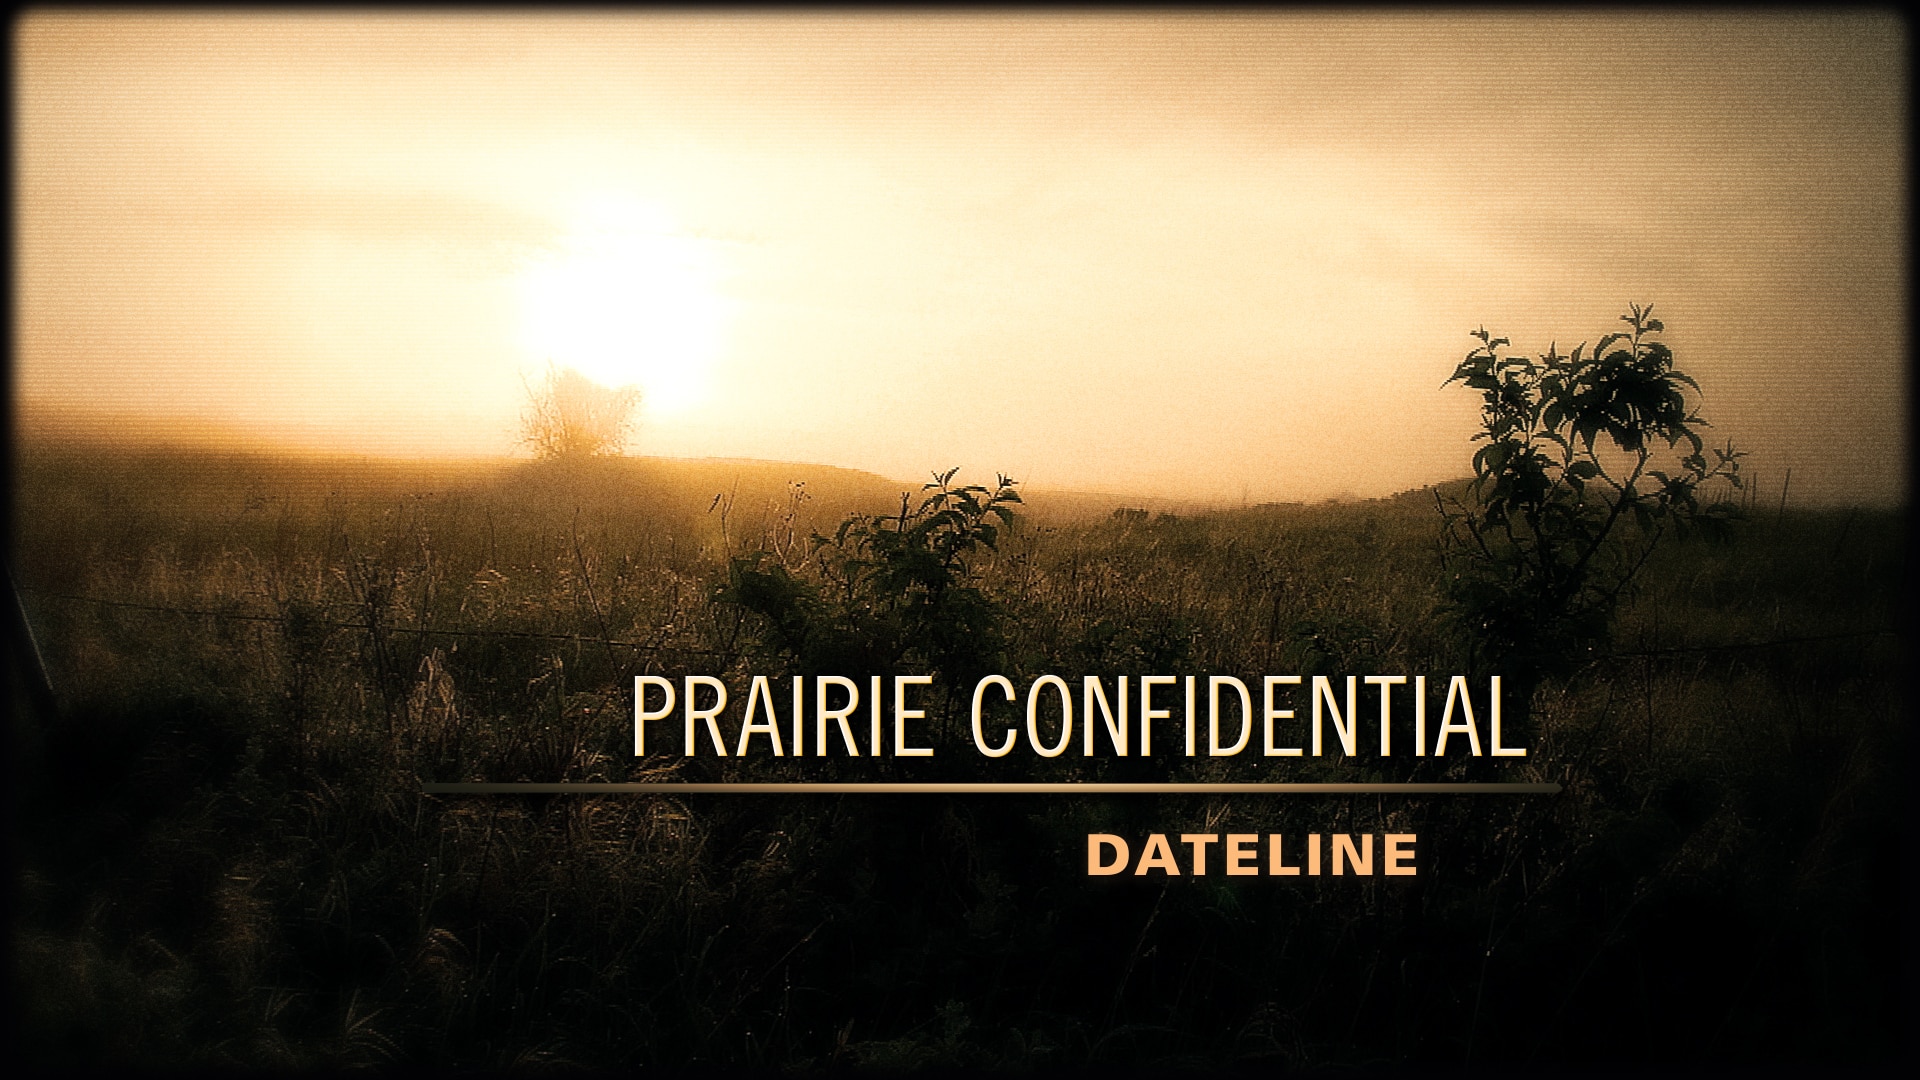 Watch Dateline Episode: Prairie Confidential - NBC.com.